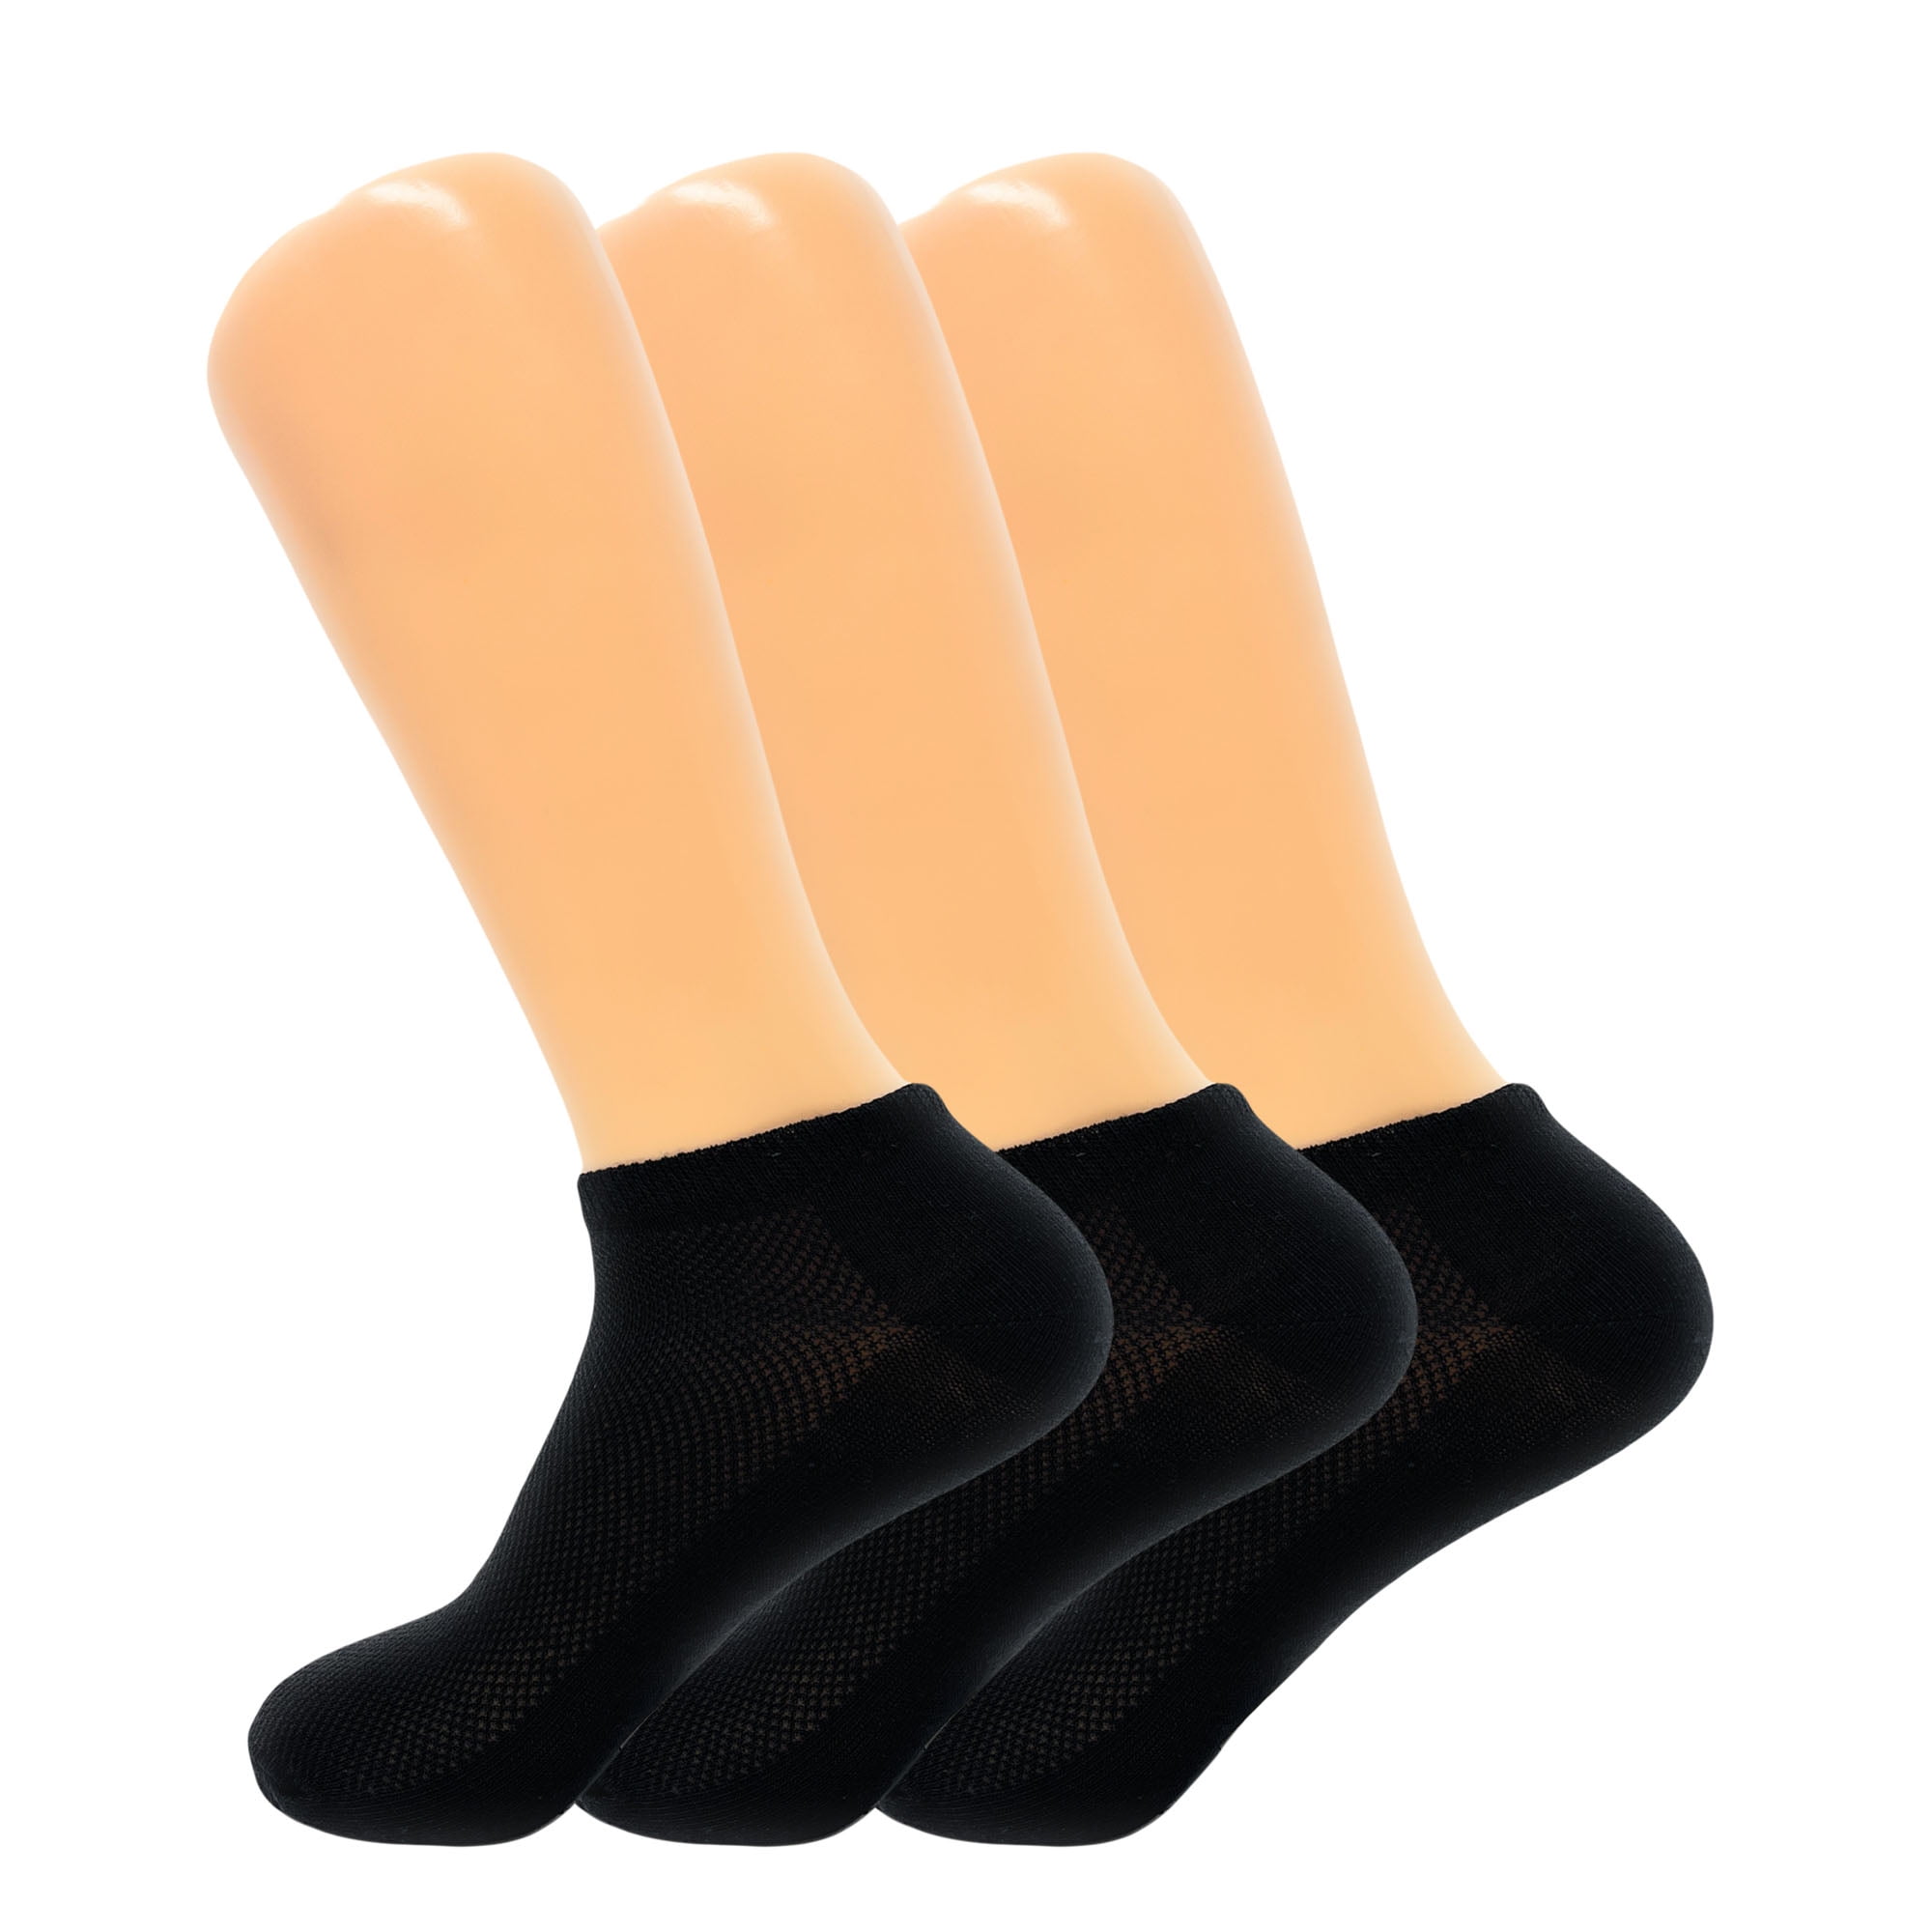 ONKE Men's Mesh Ventilating Comfort Fit Performance Moisture Wicking Breathable Training Running Low Cut Socks 